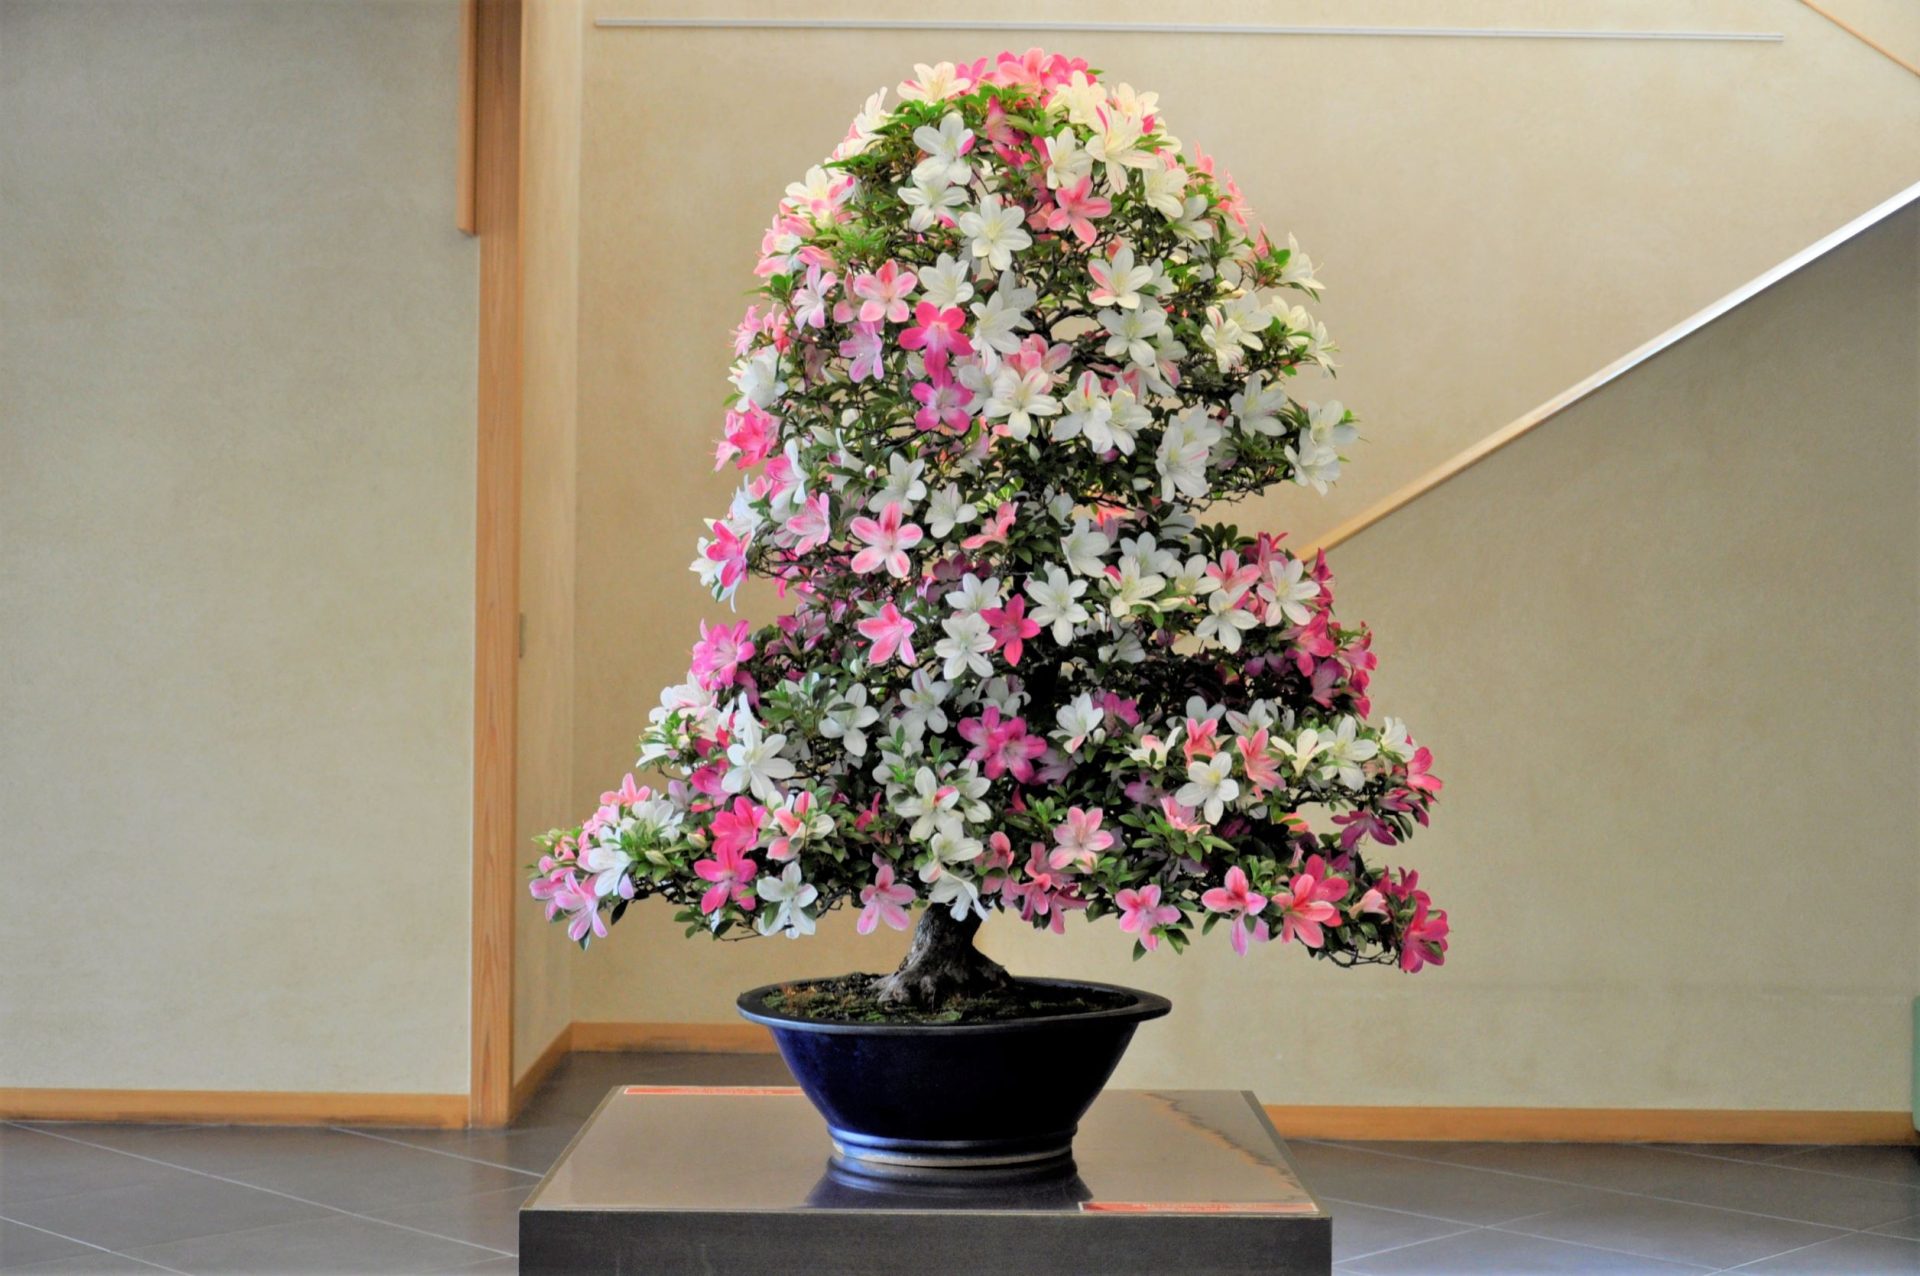 Special exhibition of Satsuki azalea bonsai to commemorate World Bonsai Day 2022